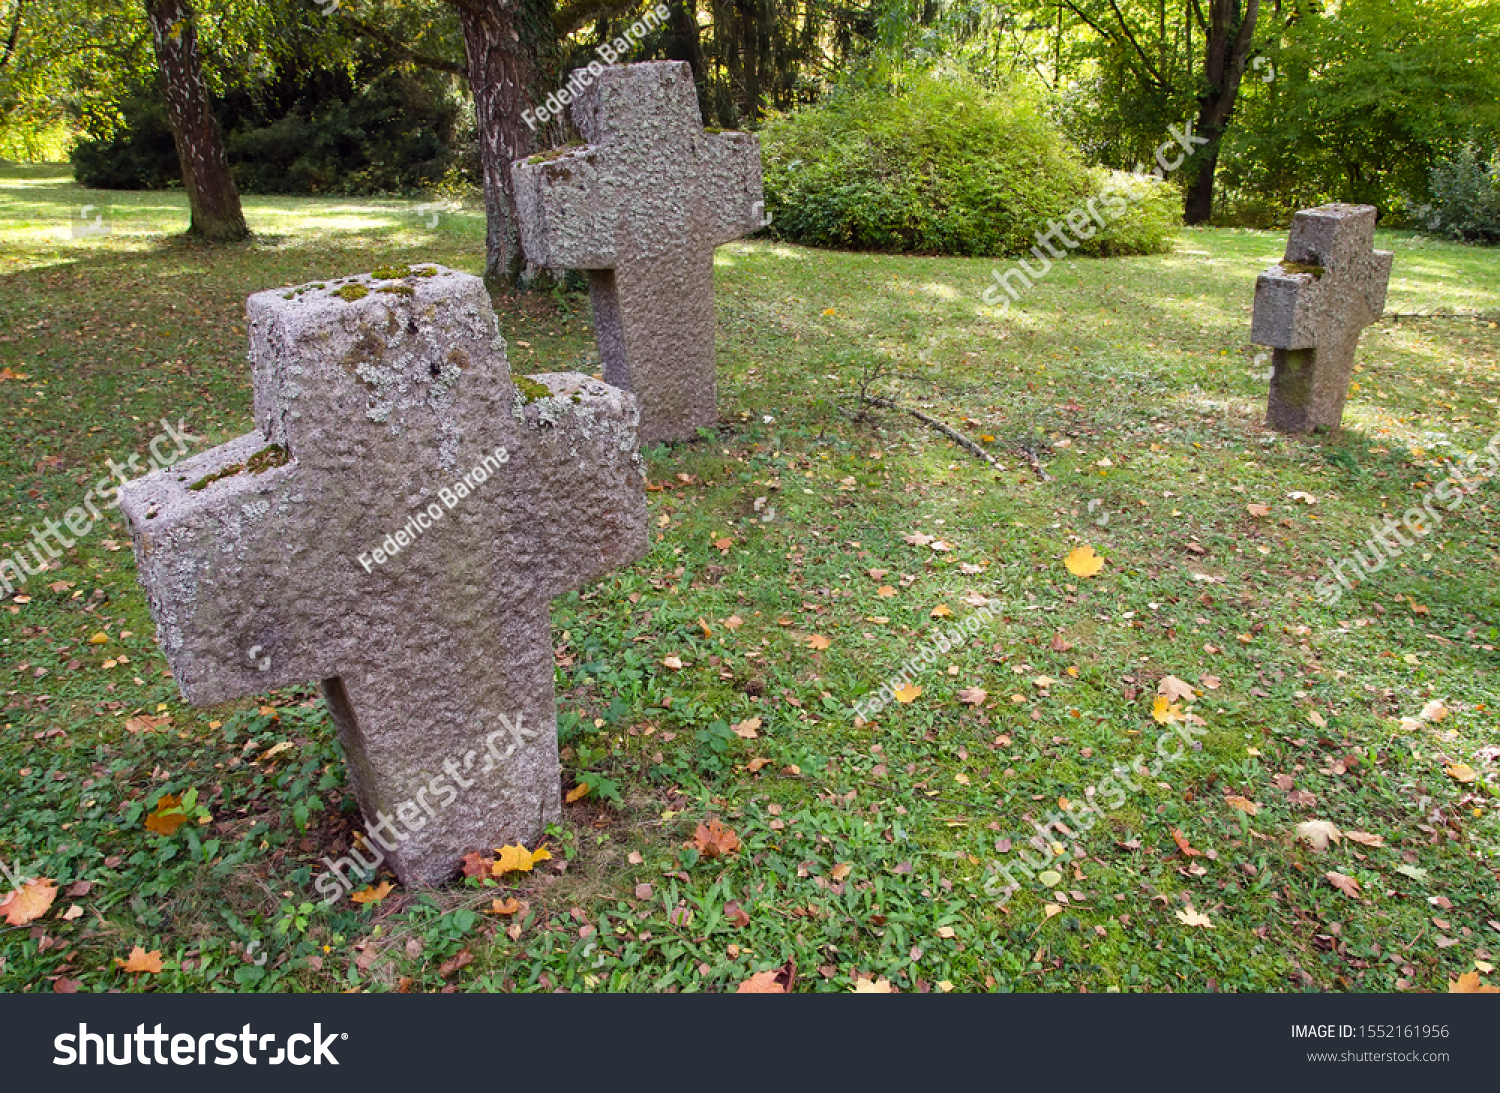 stock-photo-three-stone-crosses-in-an-ol